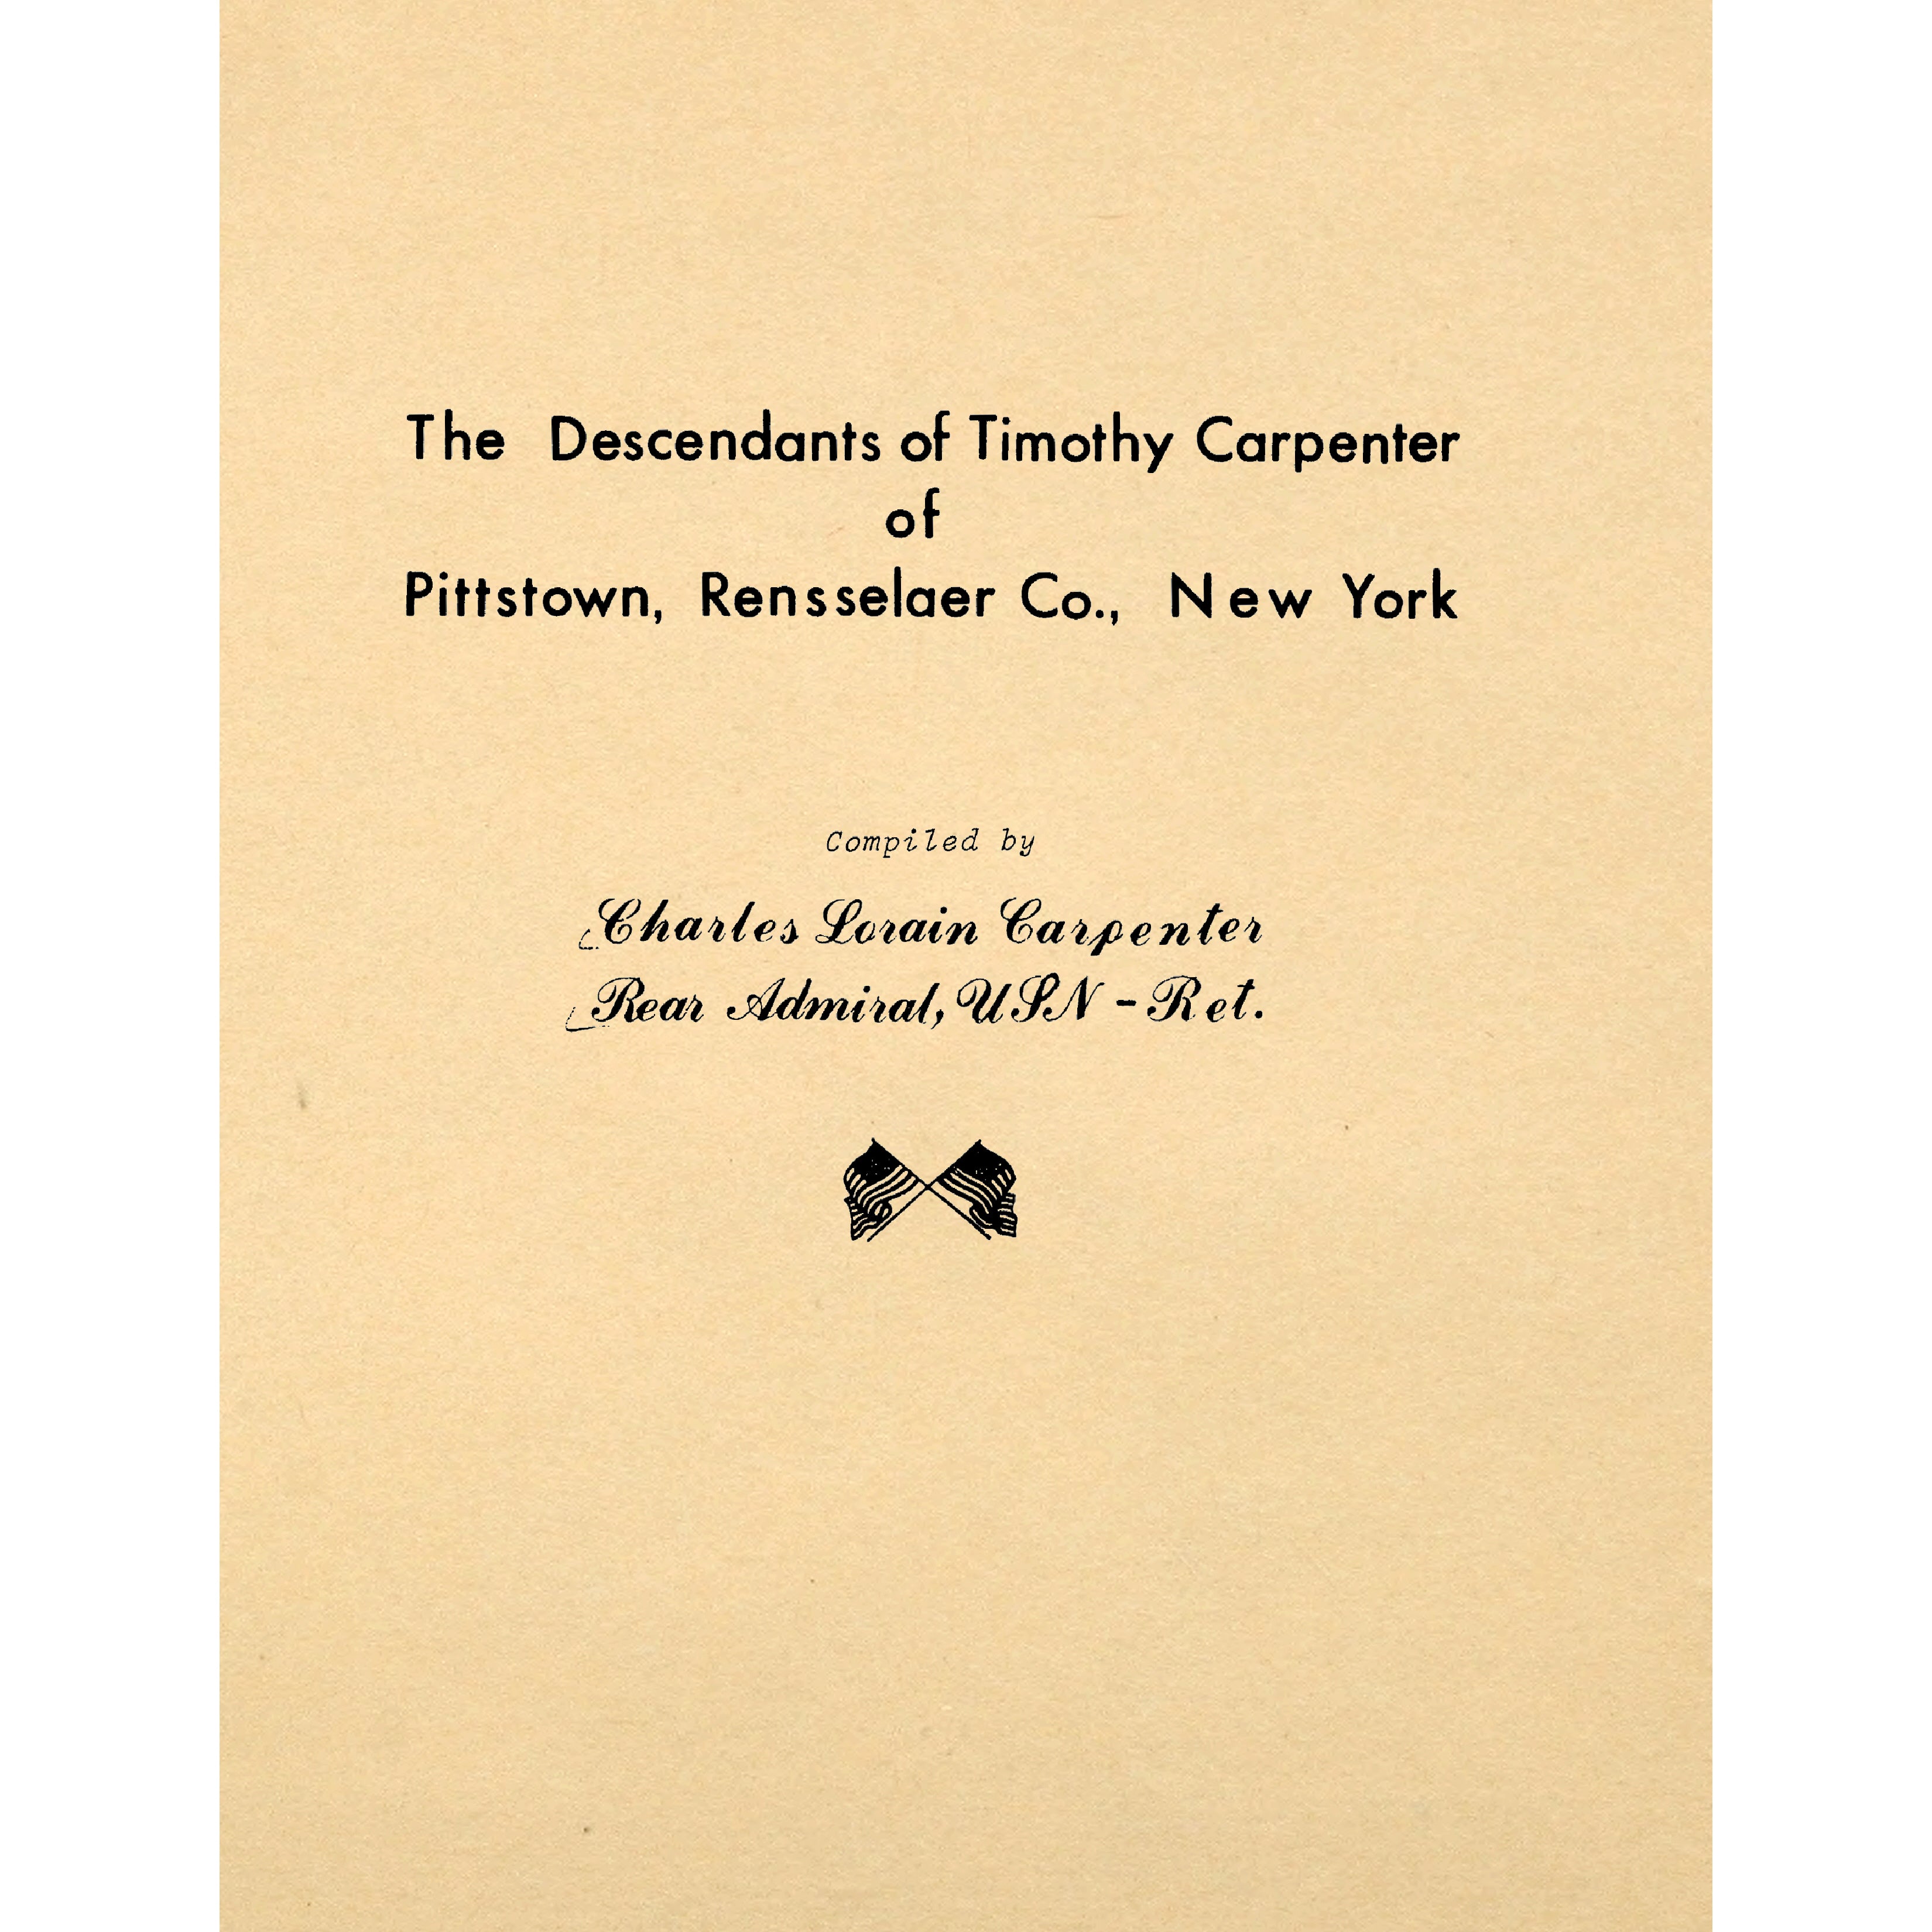 The Descendants of Timothy Carpenter of Pittstown, Rensselaer Co., New York